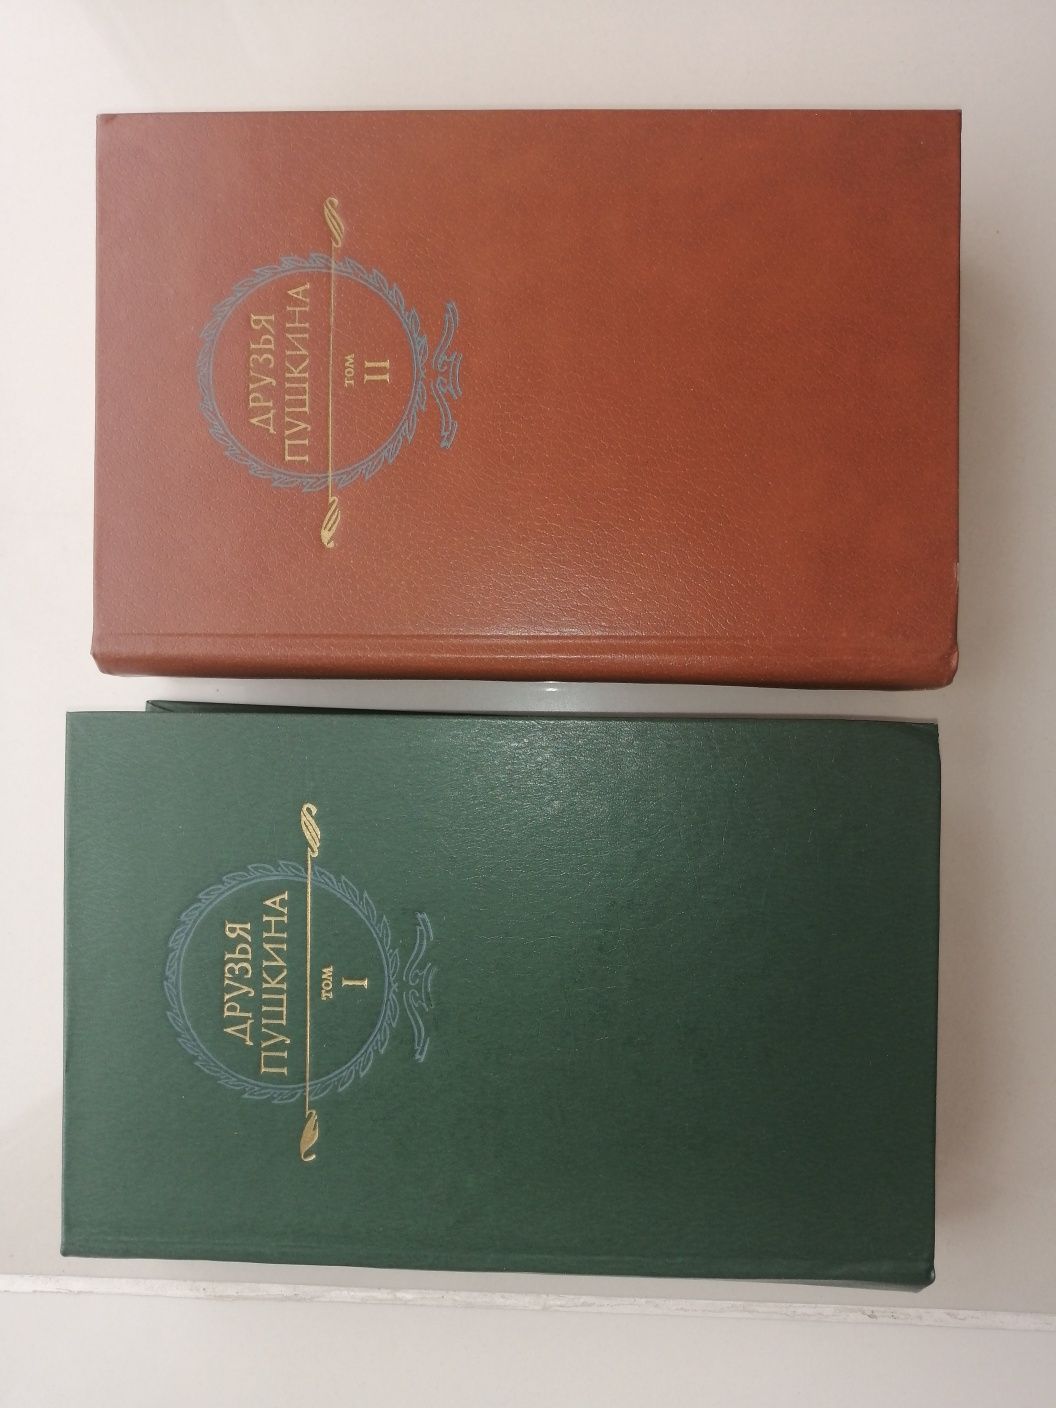 Продам книги, В.А.Жуковский, 3 тома, фантастика, приключения, Салтыков